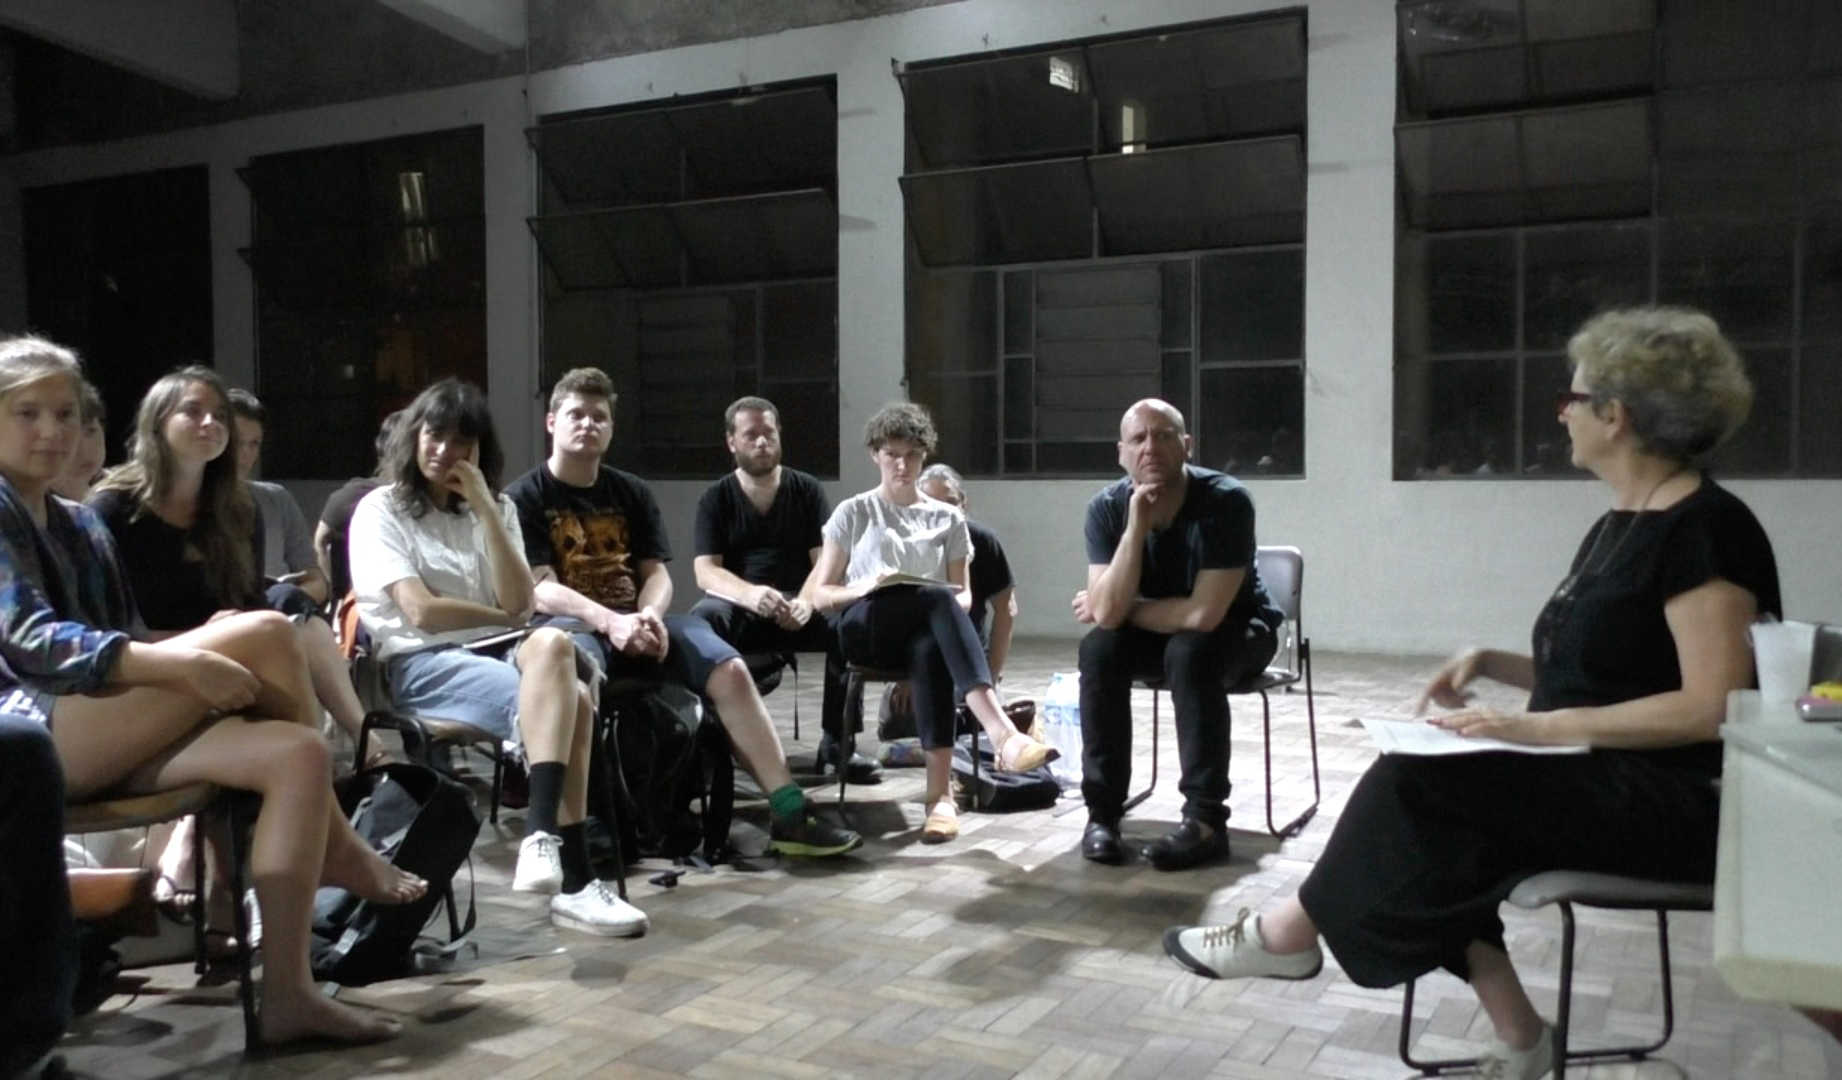 Seminar Suely Rolnik for DAI. Location: Casa do Povo, Sao Paulo, 2015.